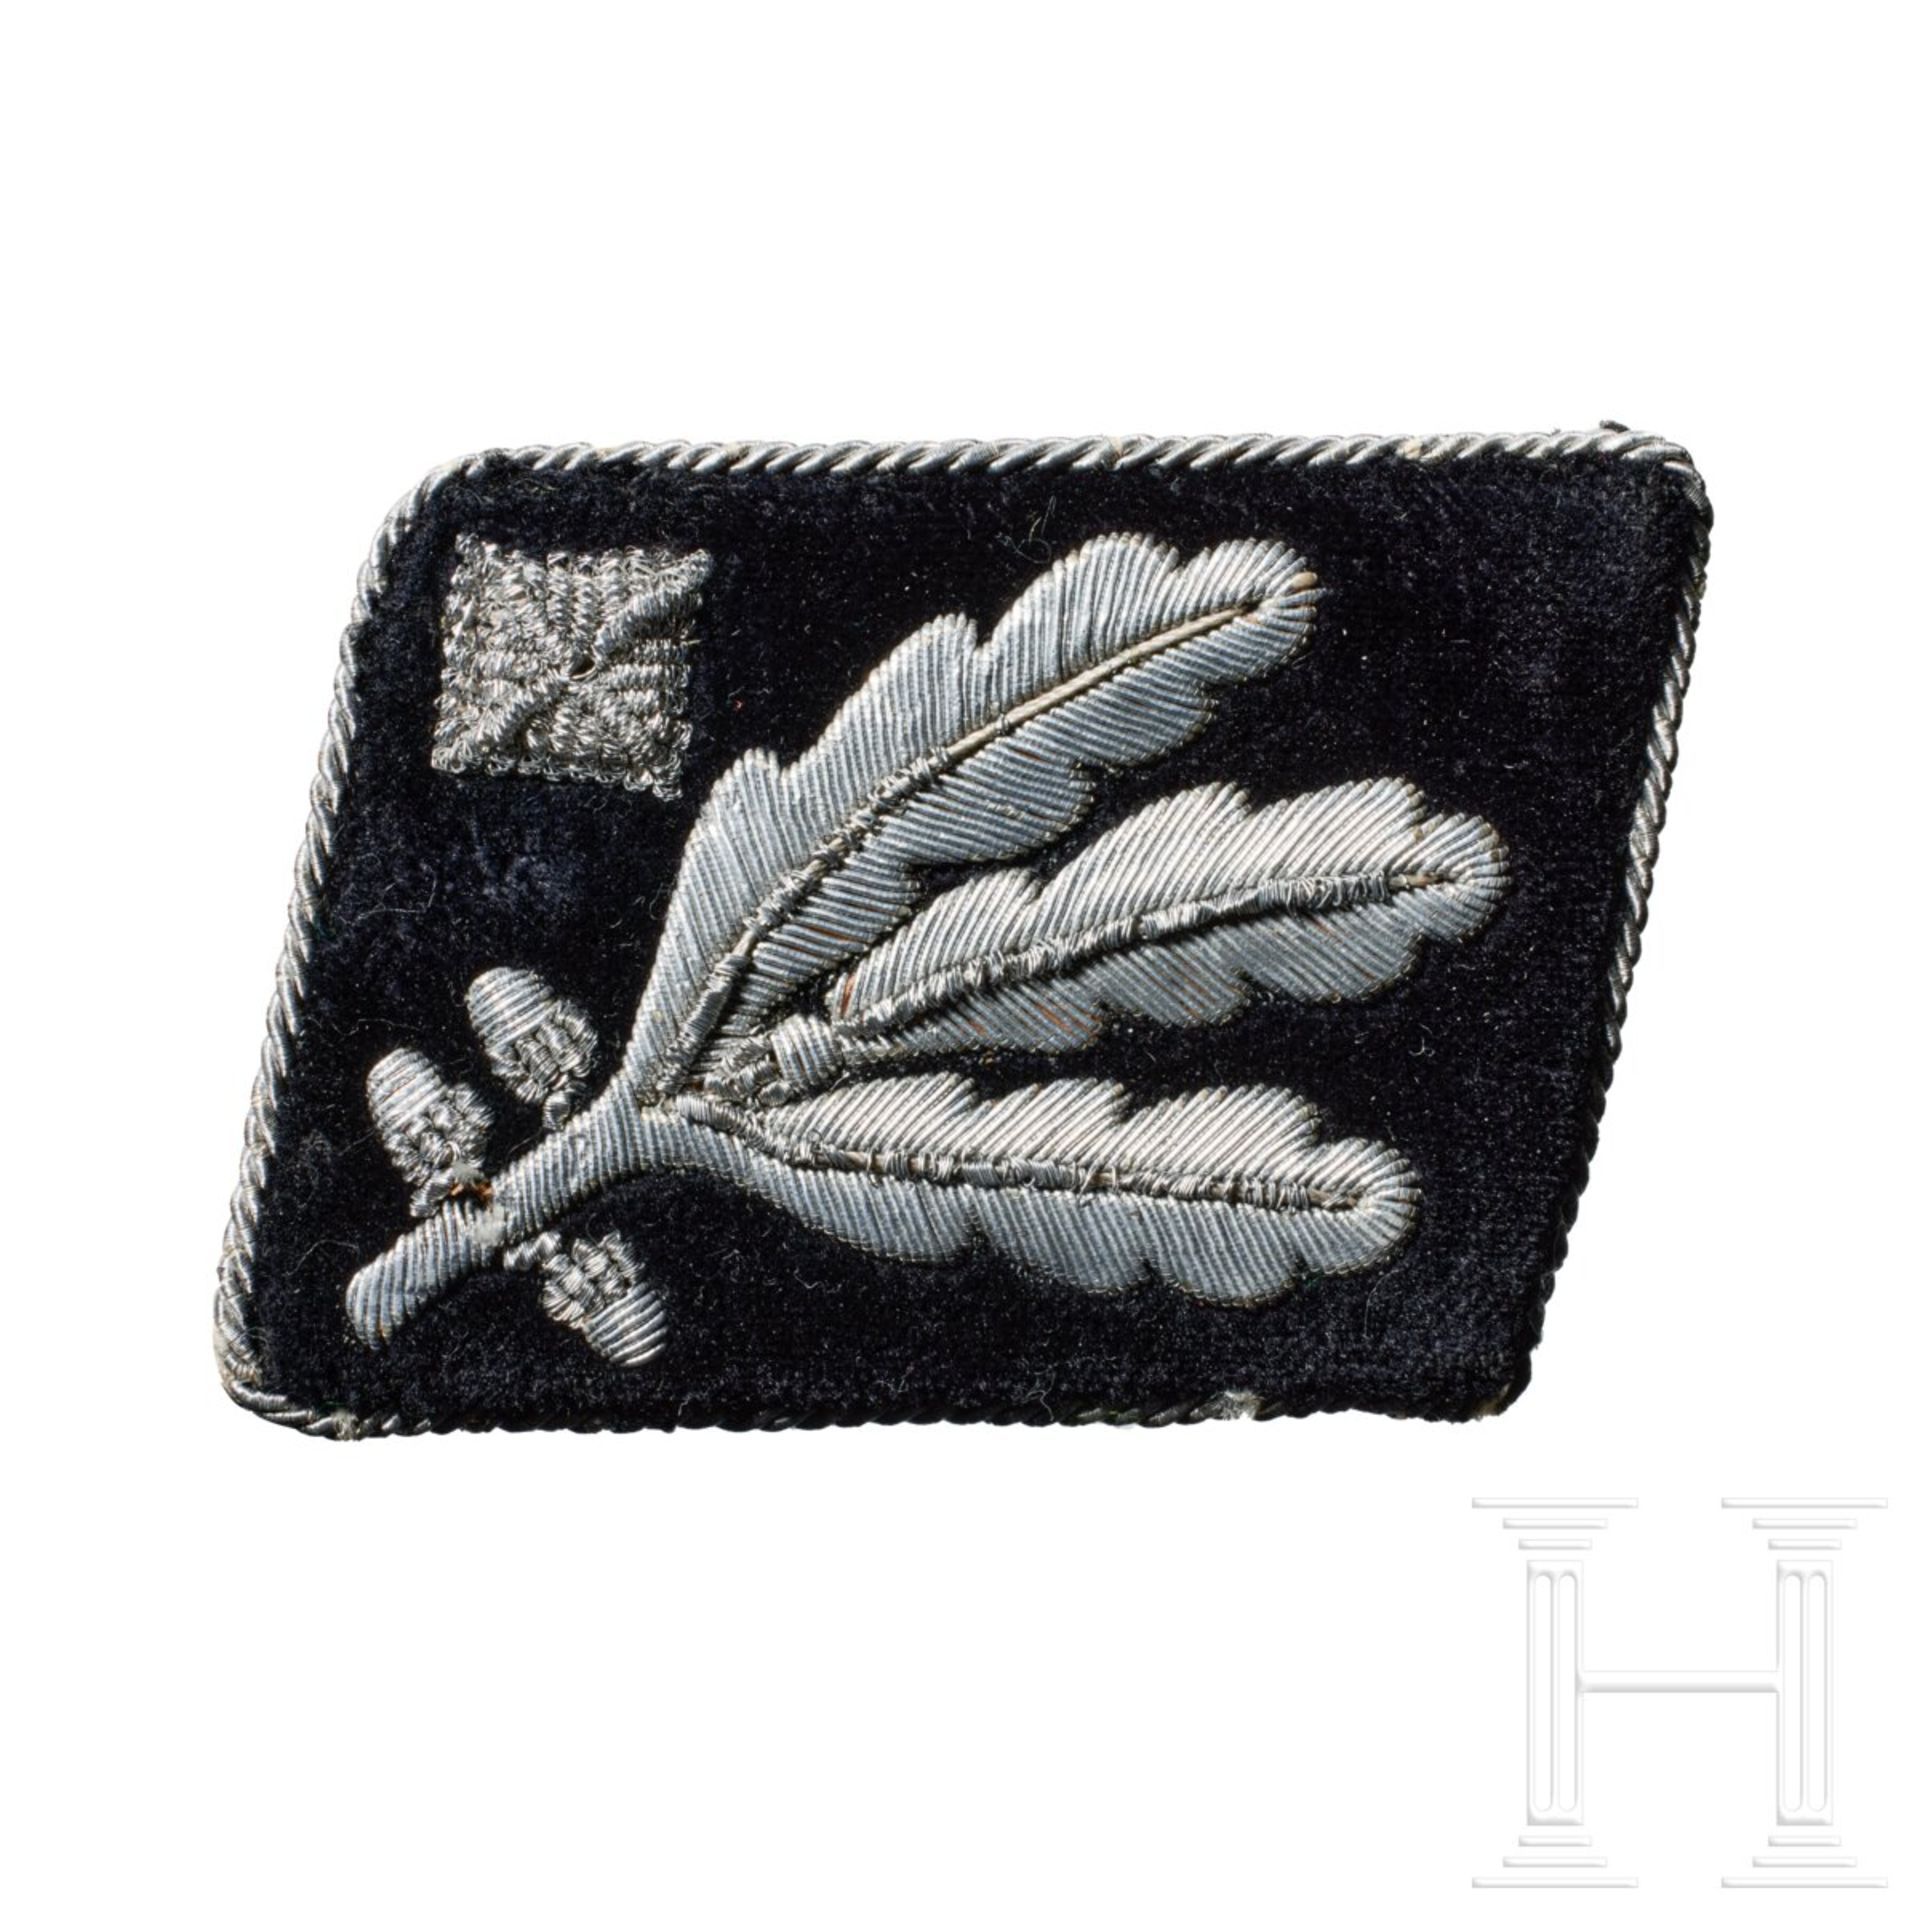 A Left Collar Tab for SS-Obergruppenführer, 1929-42 